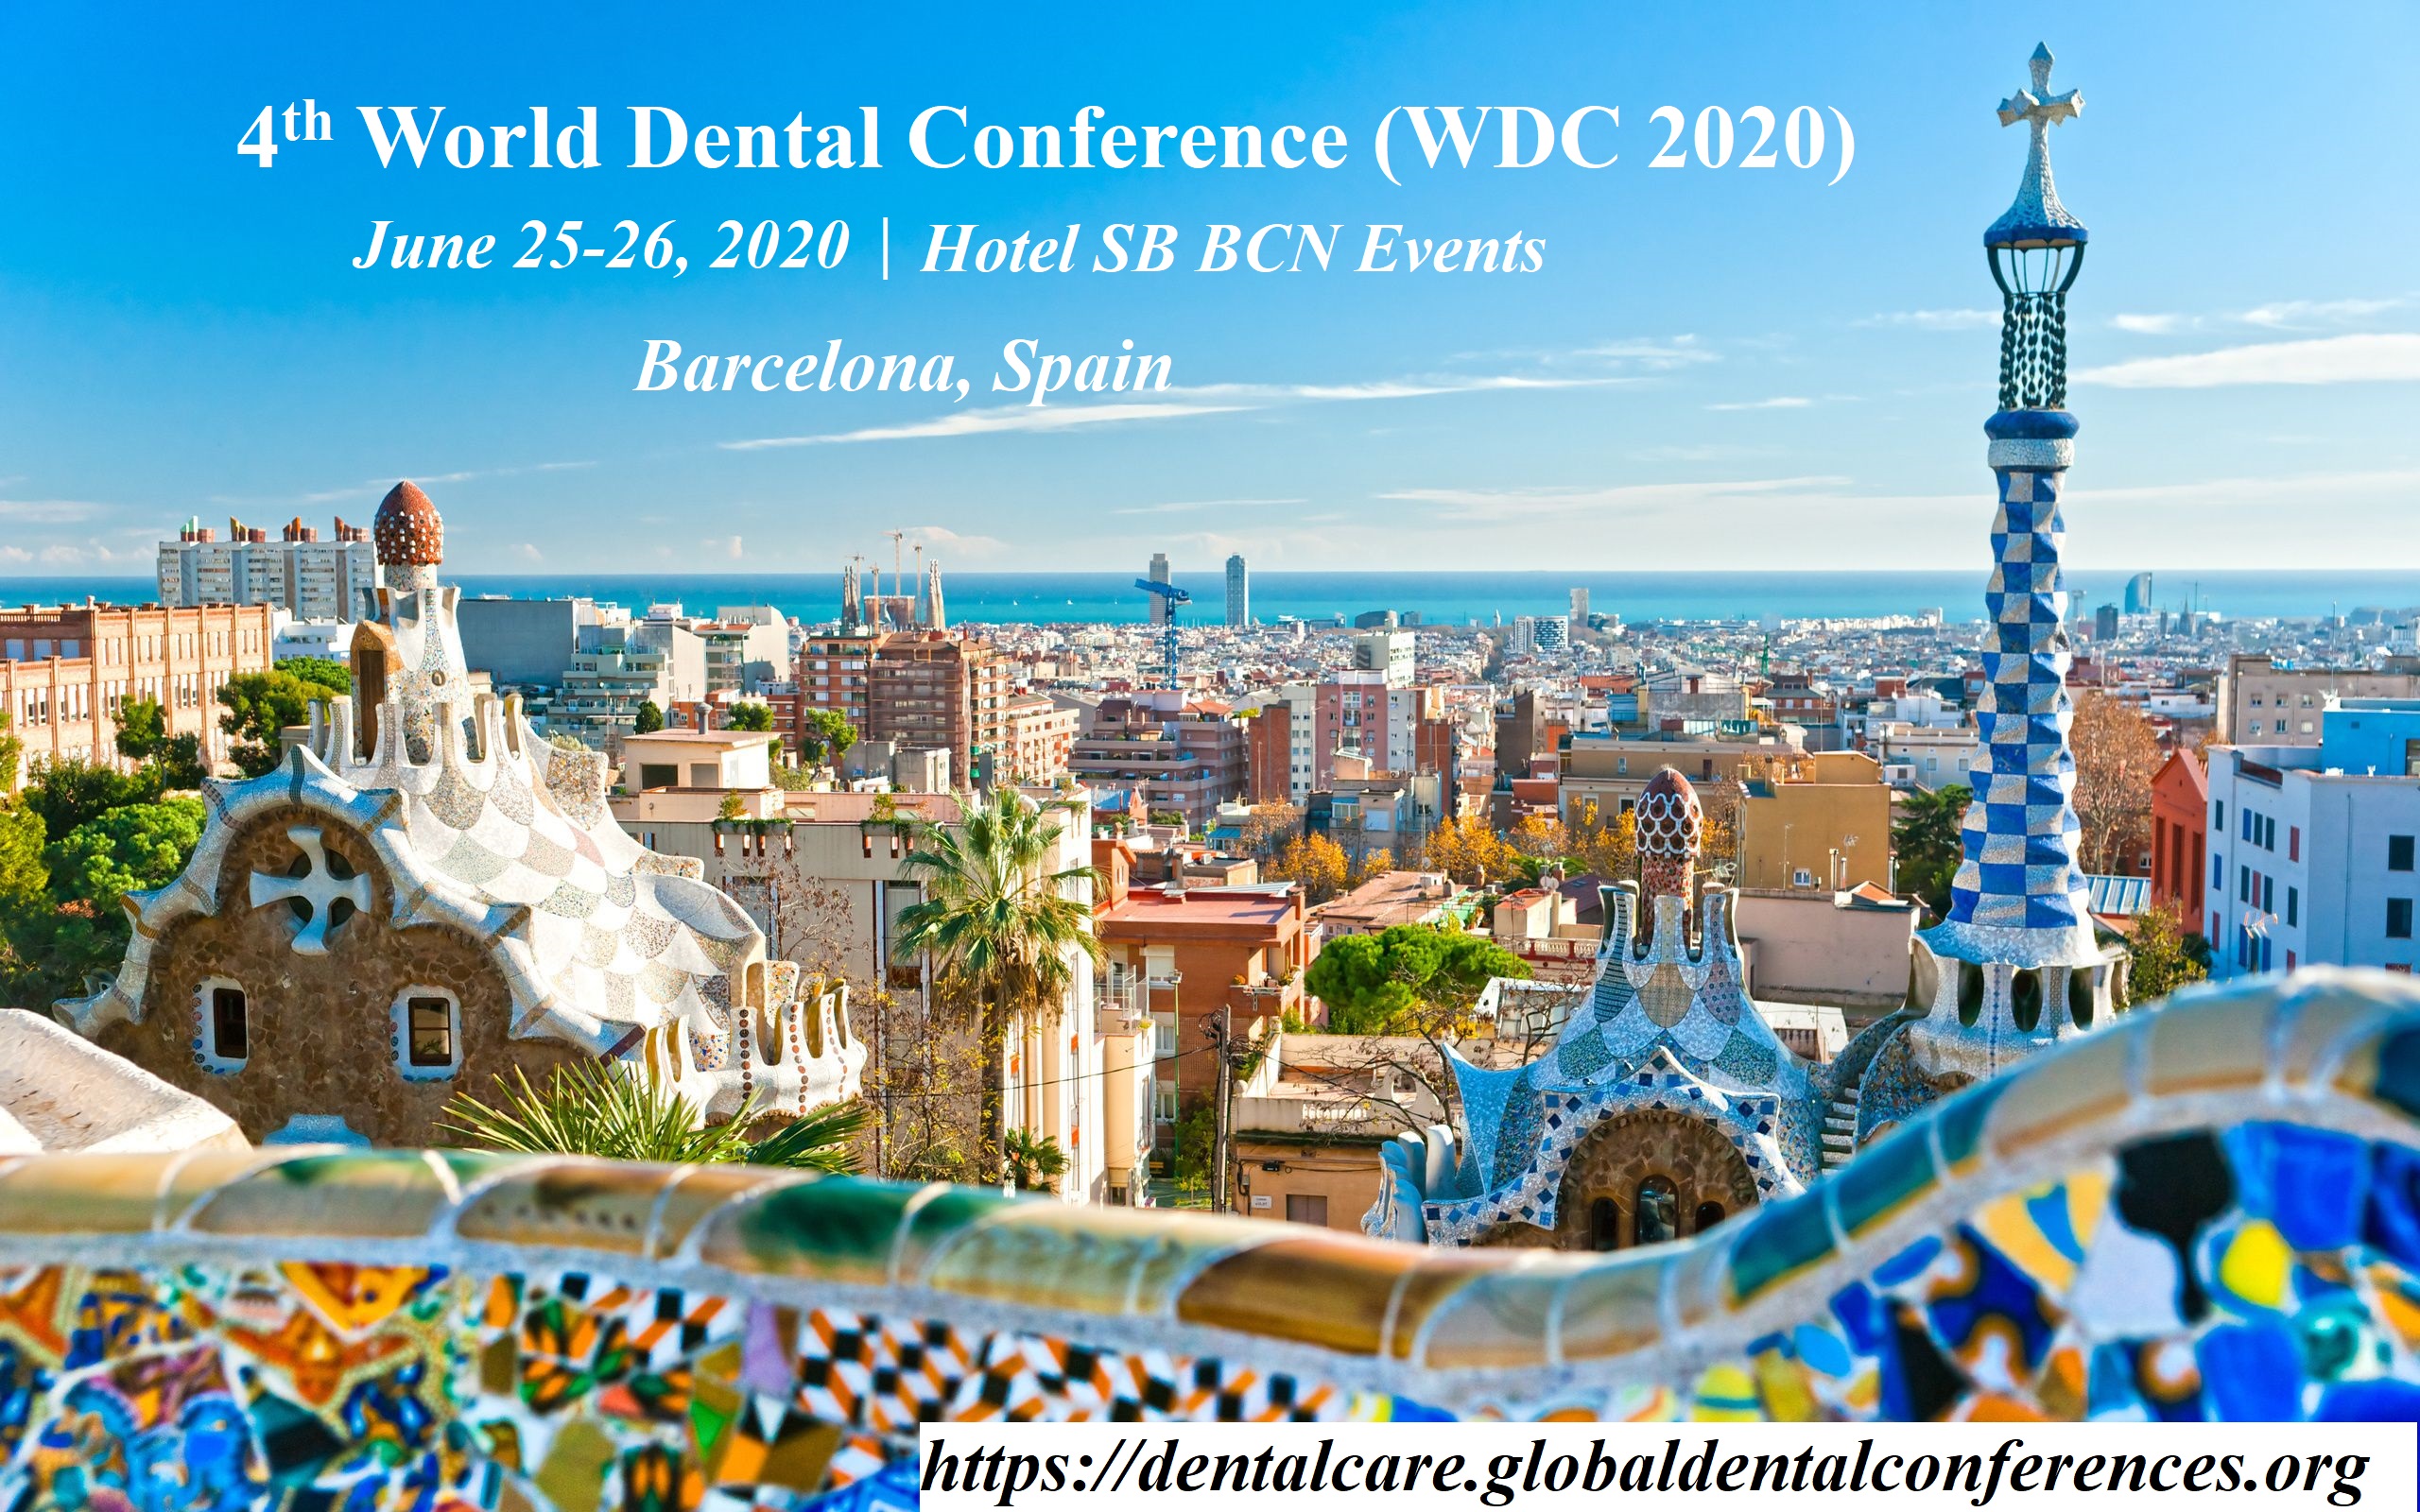 4th World Dental Conference - WDC 2020, Barcelona, Spain